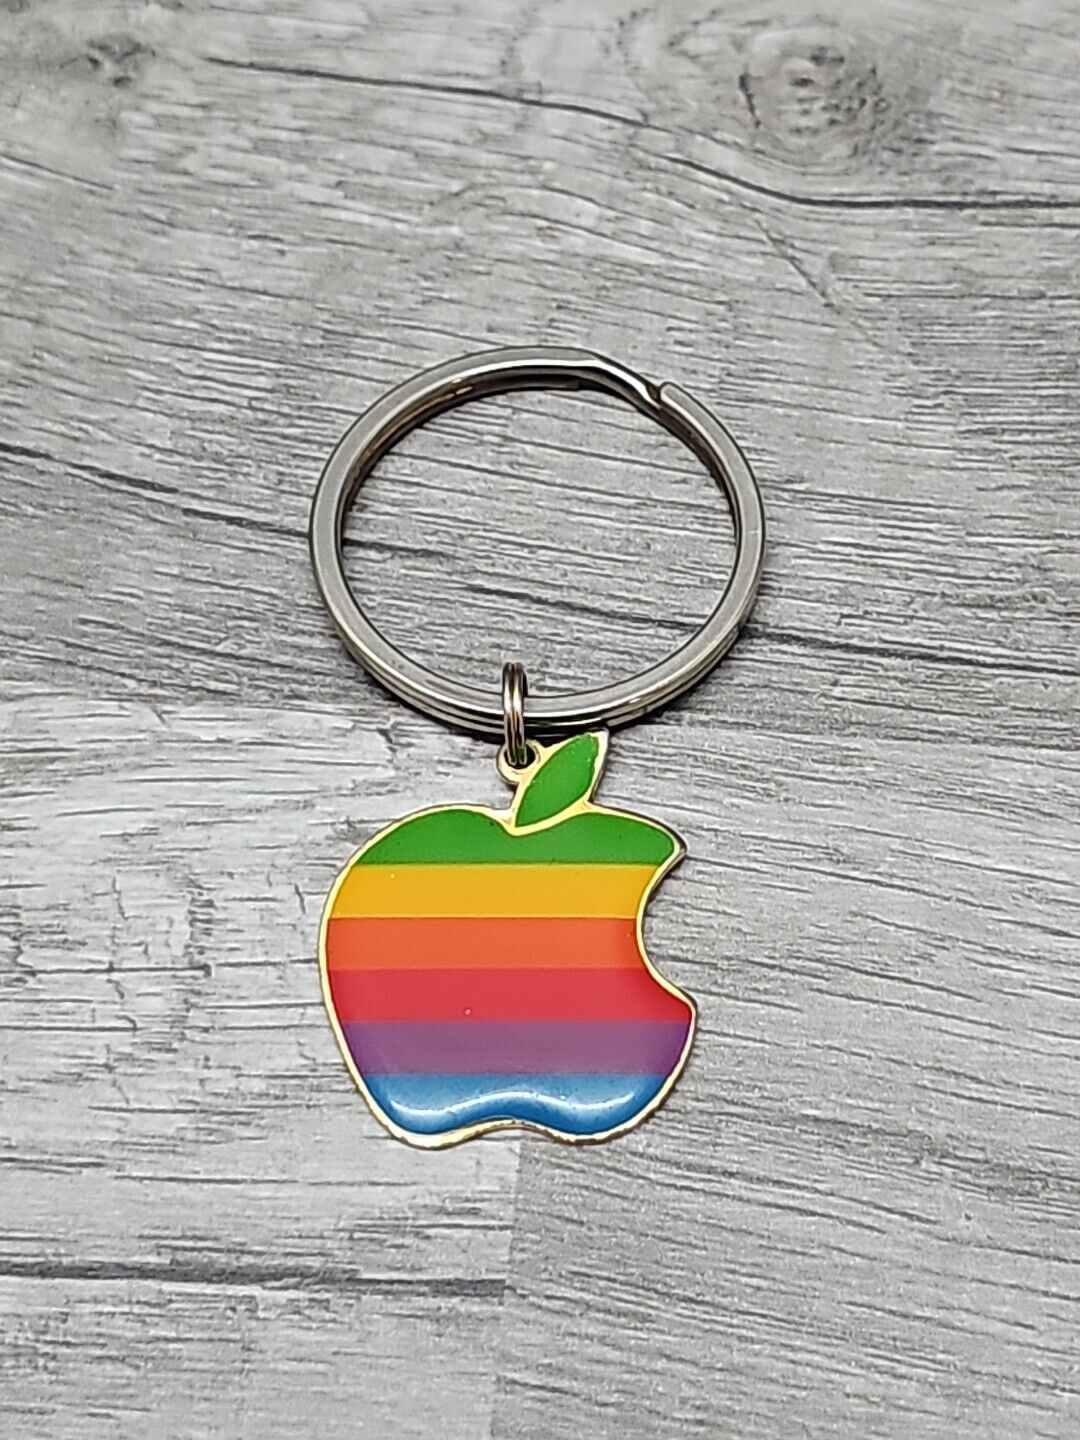 Vintage Apple Computer Rainbow Logo Enamel Keychain 1980s/1990s